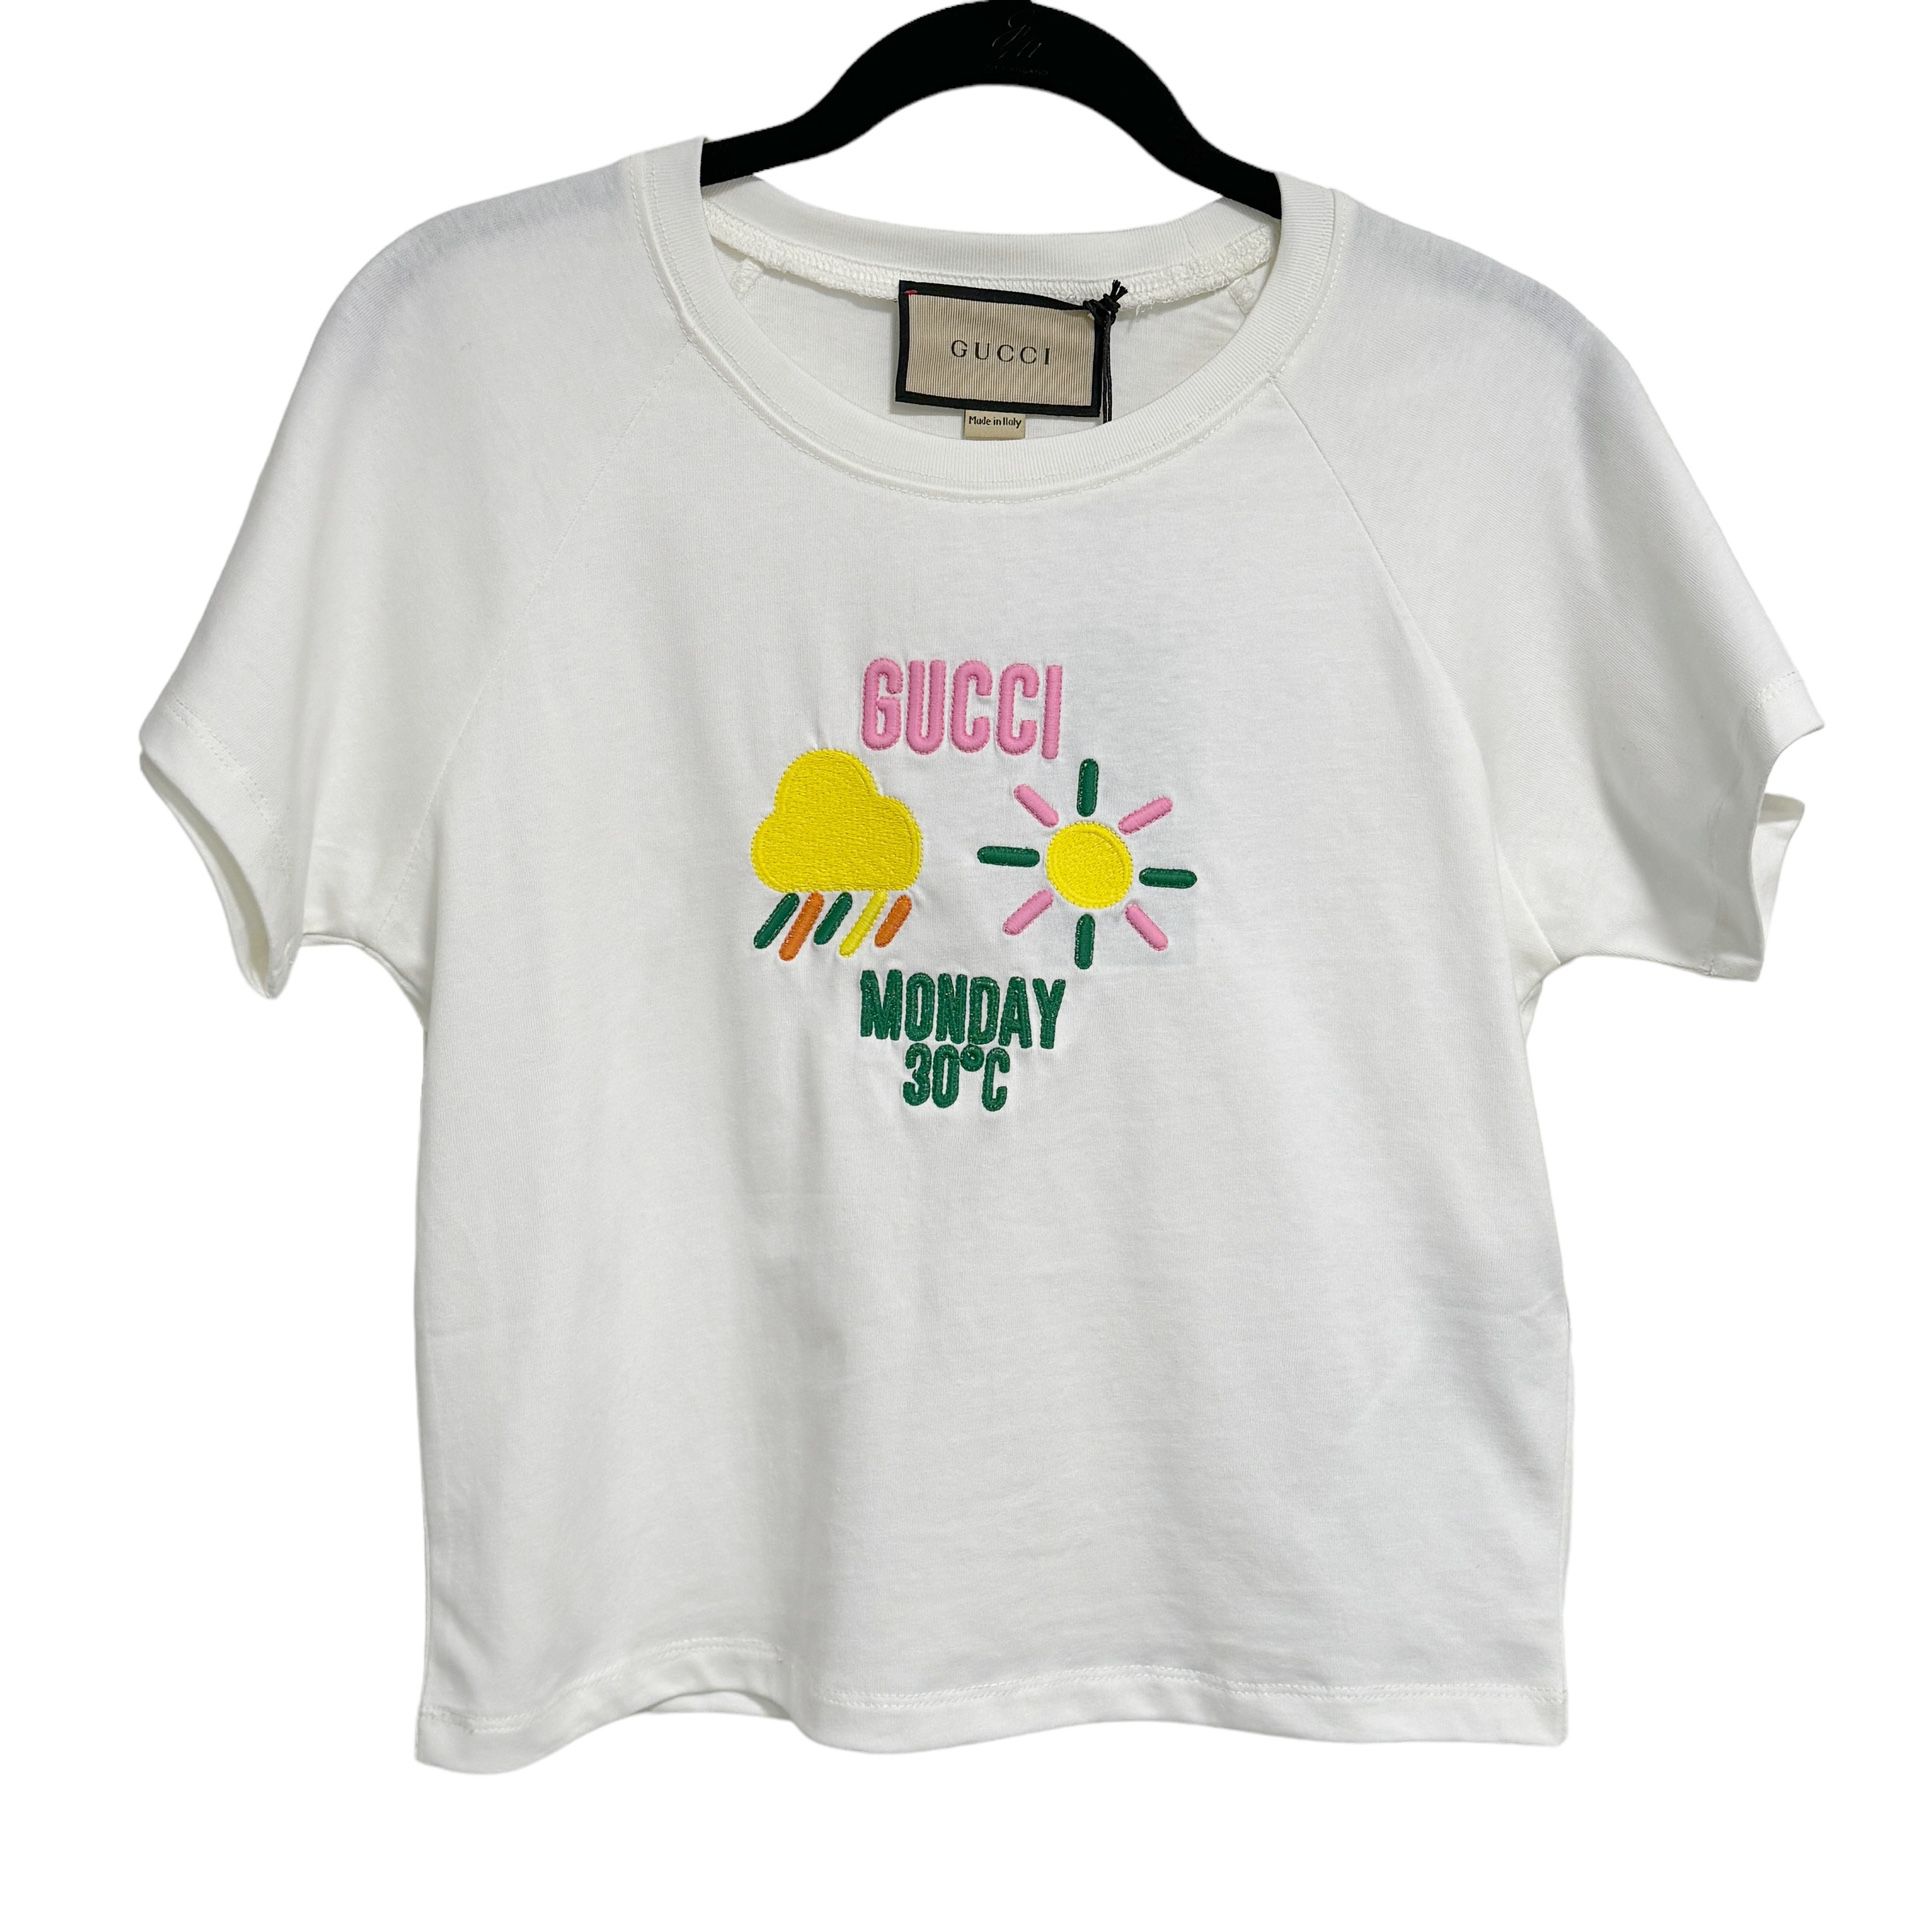 GUCCI Cotton Jersey T-shirt NEW